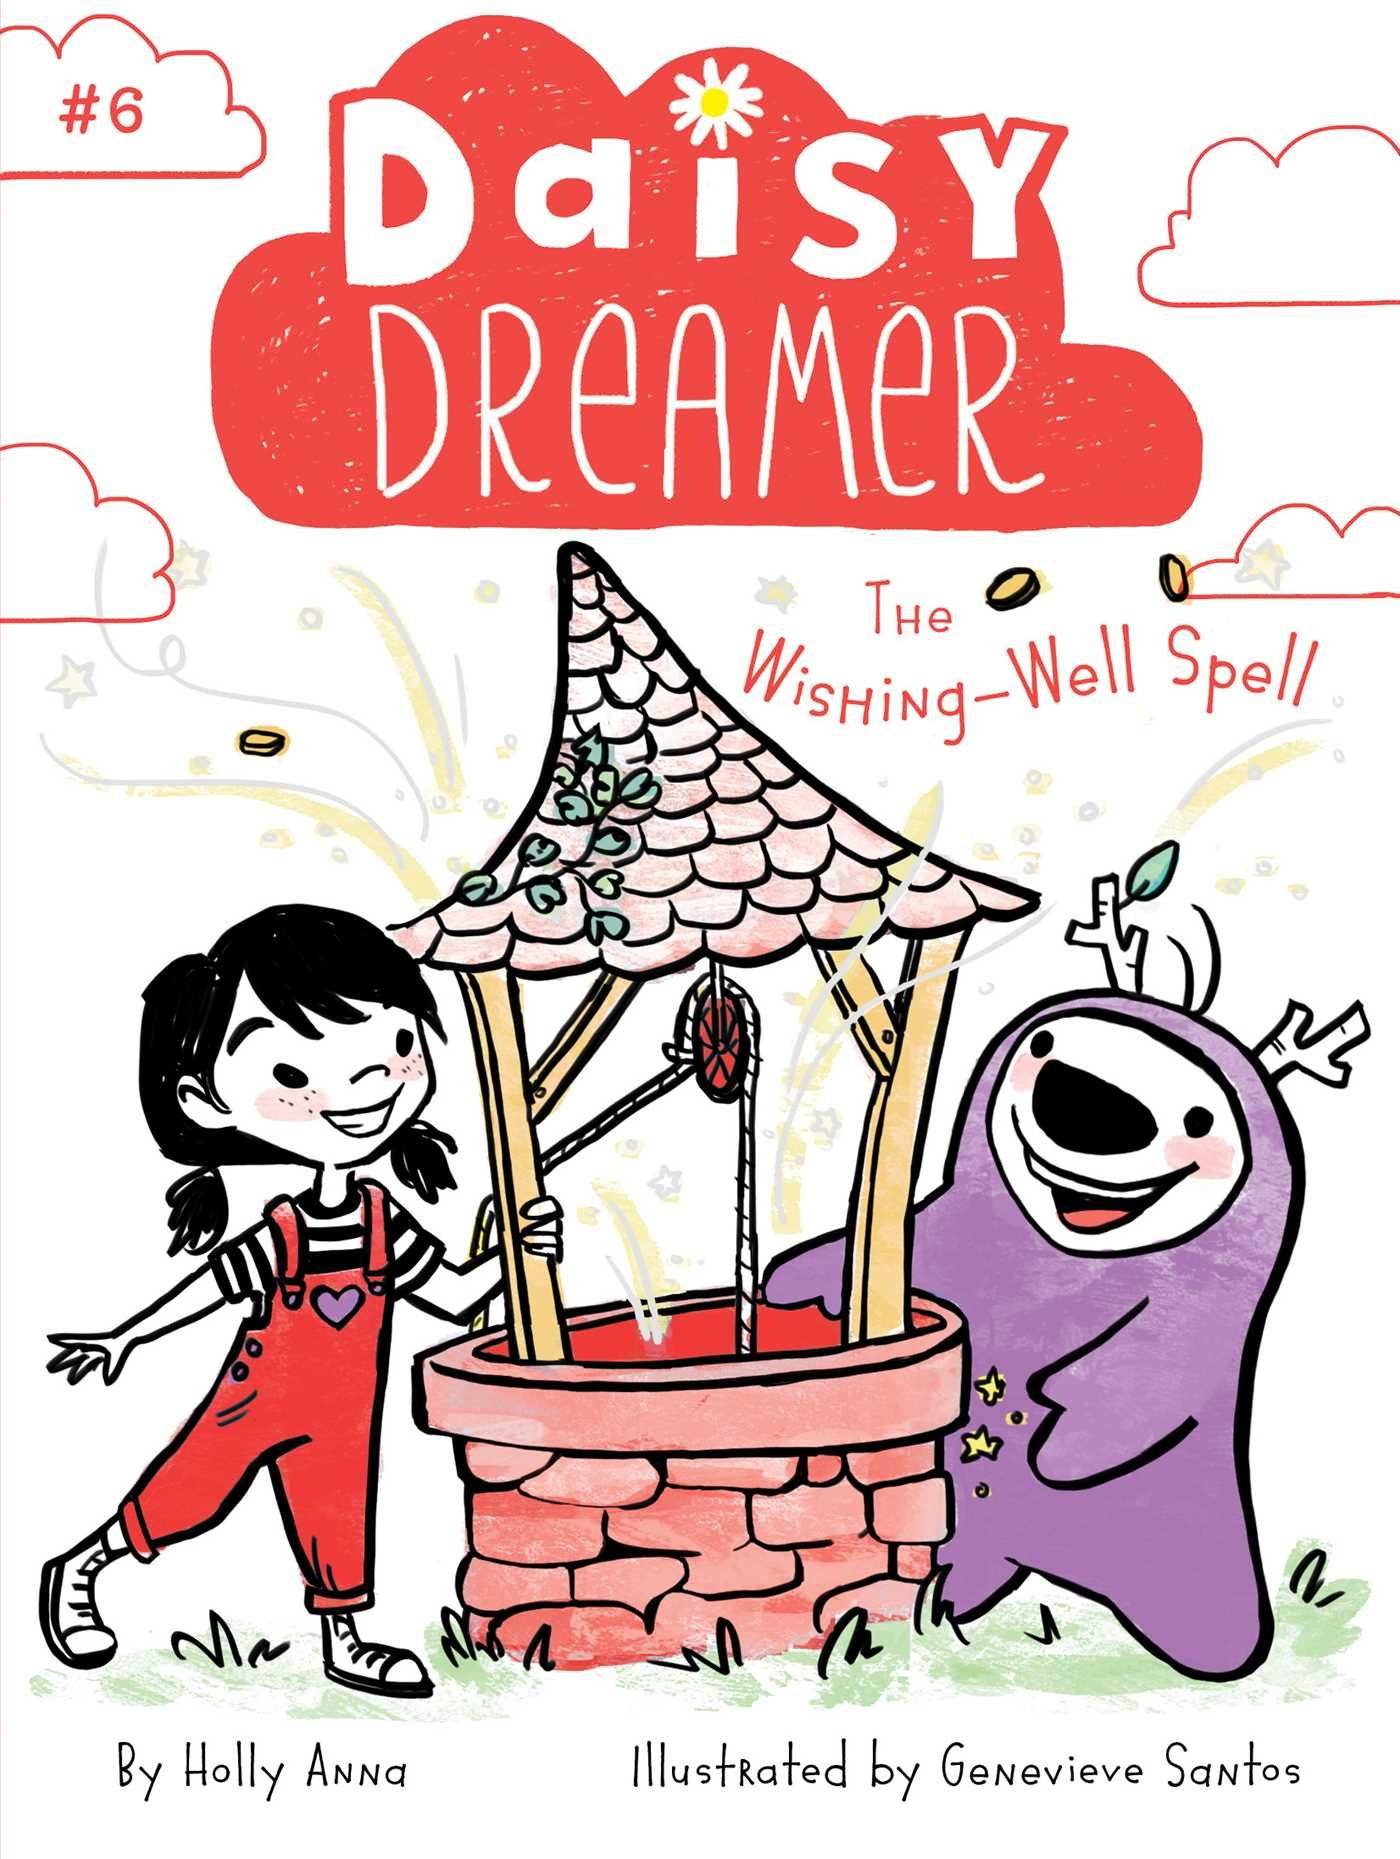 IMG : Daisy dreamer The wishing well Spell #6